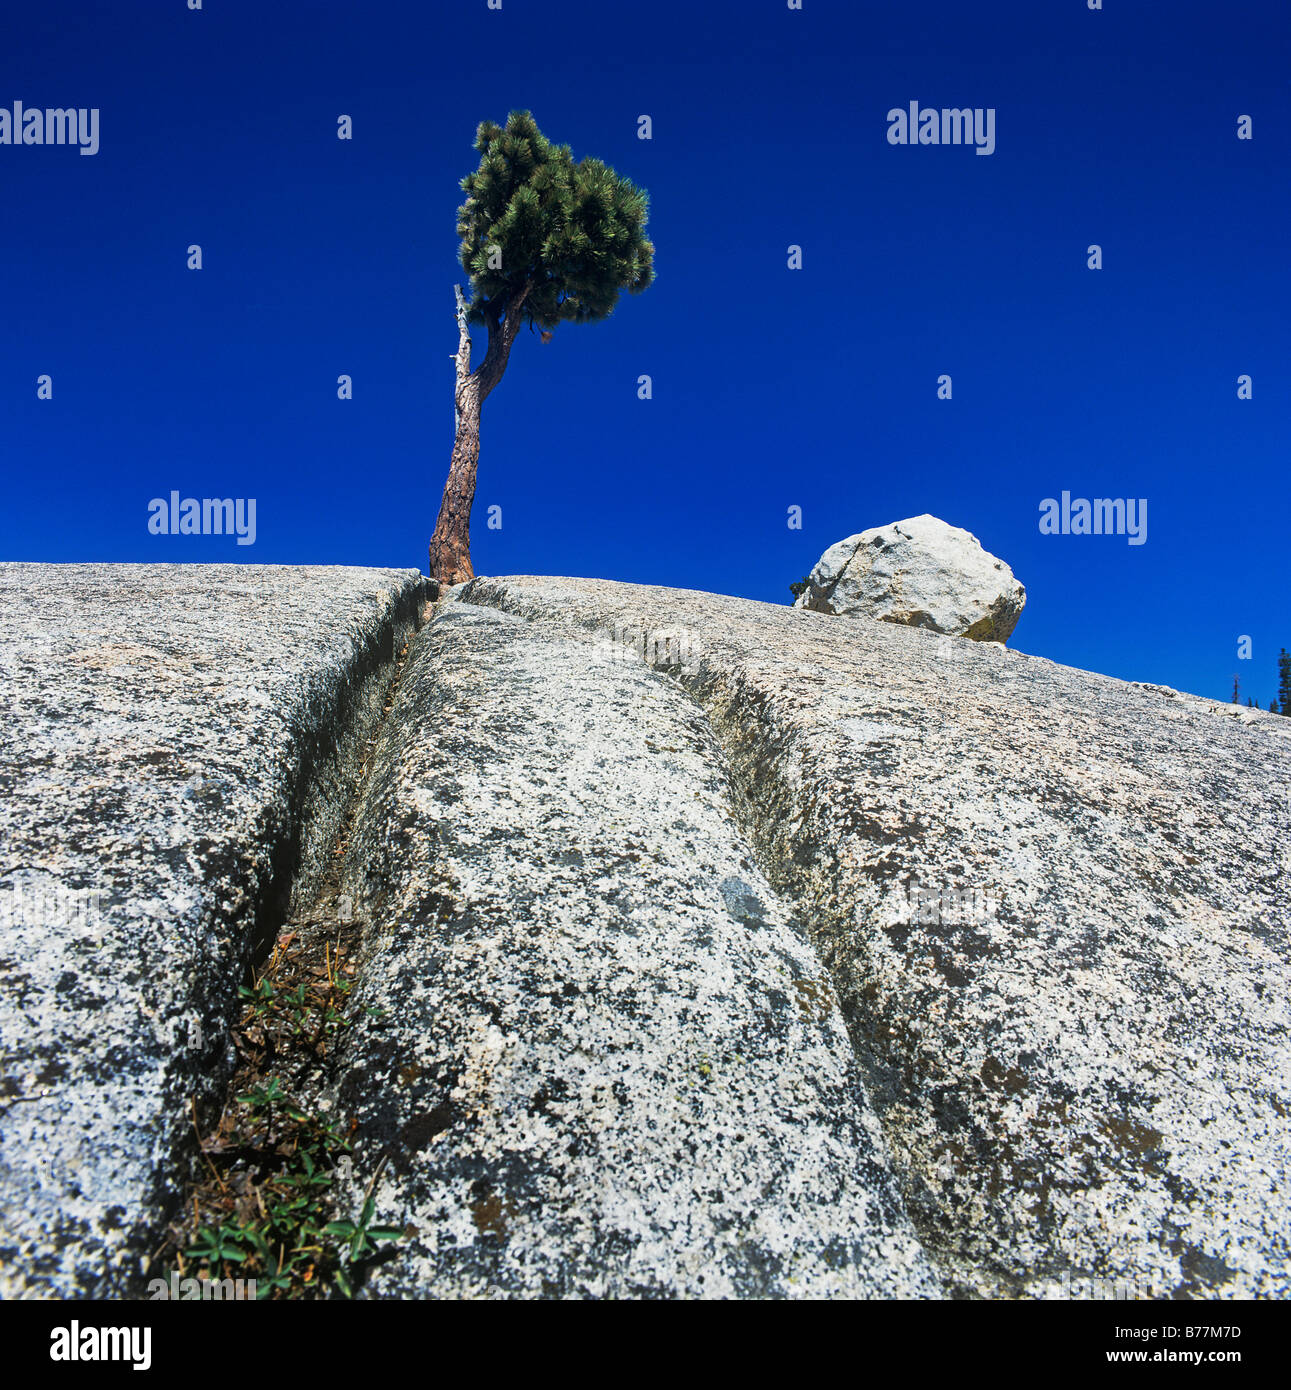 A tree growing in a harsh rocky landscape. Stock Photo